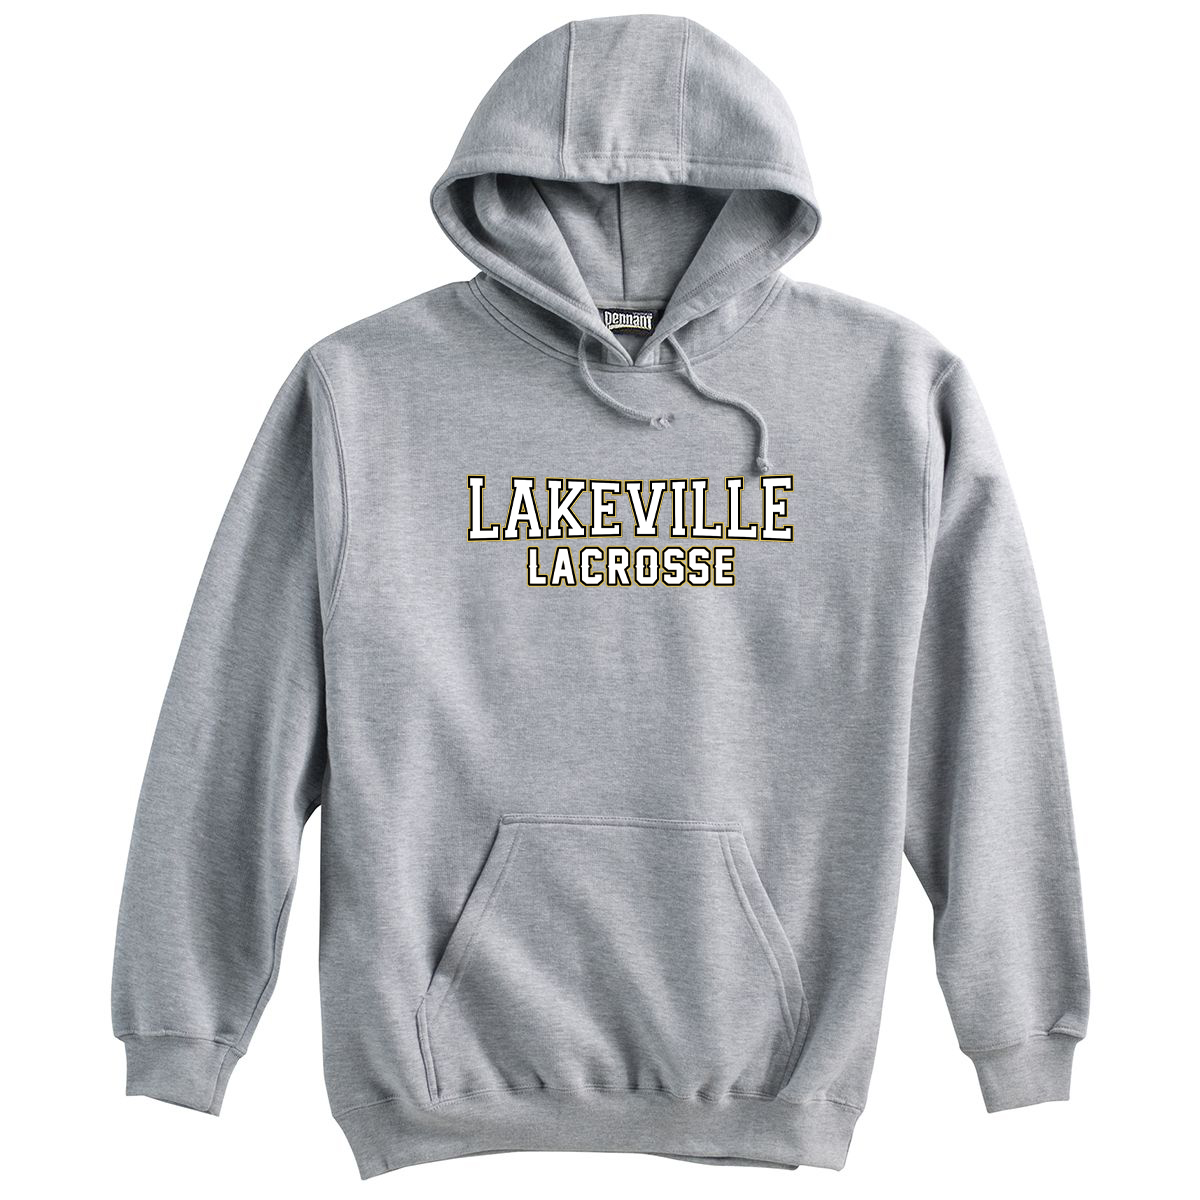 Lakeville Lacrosse Sweatshirt